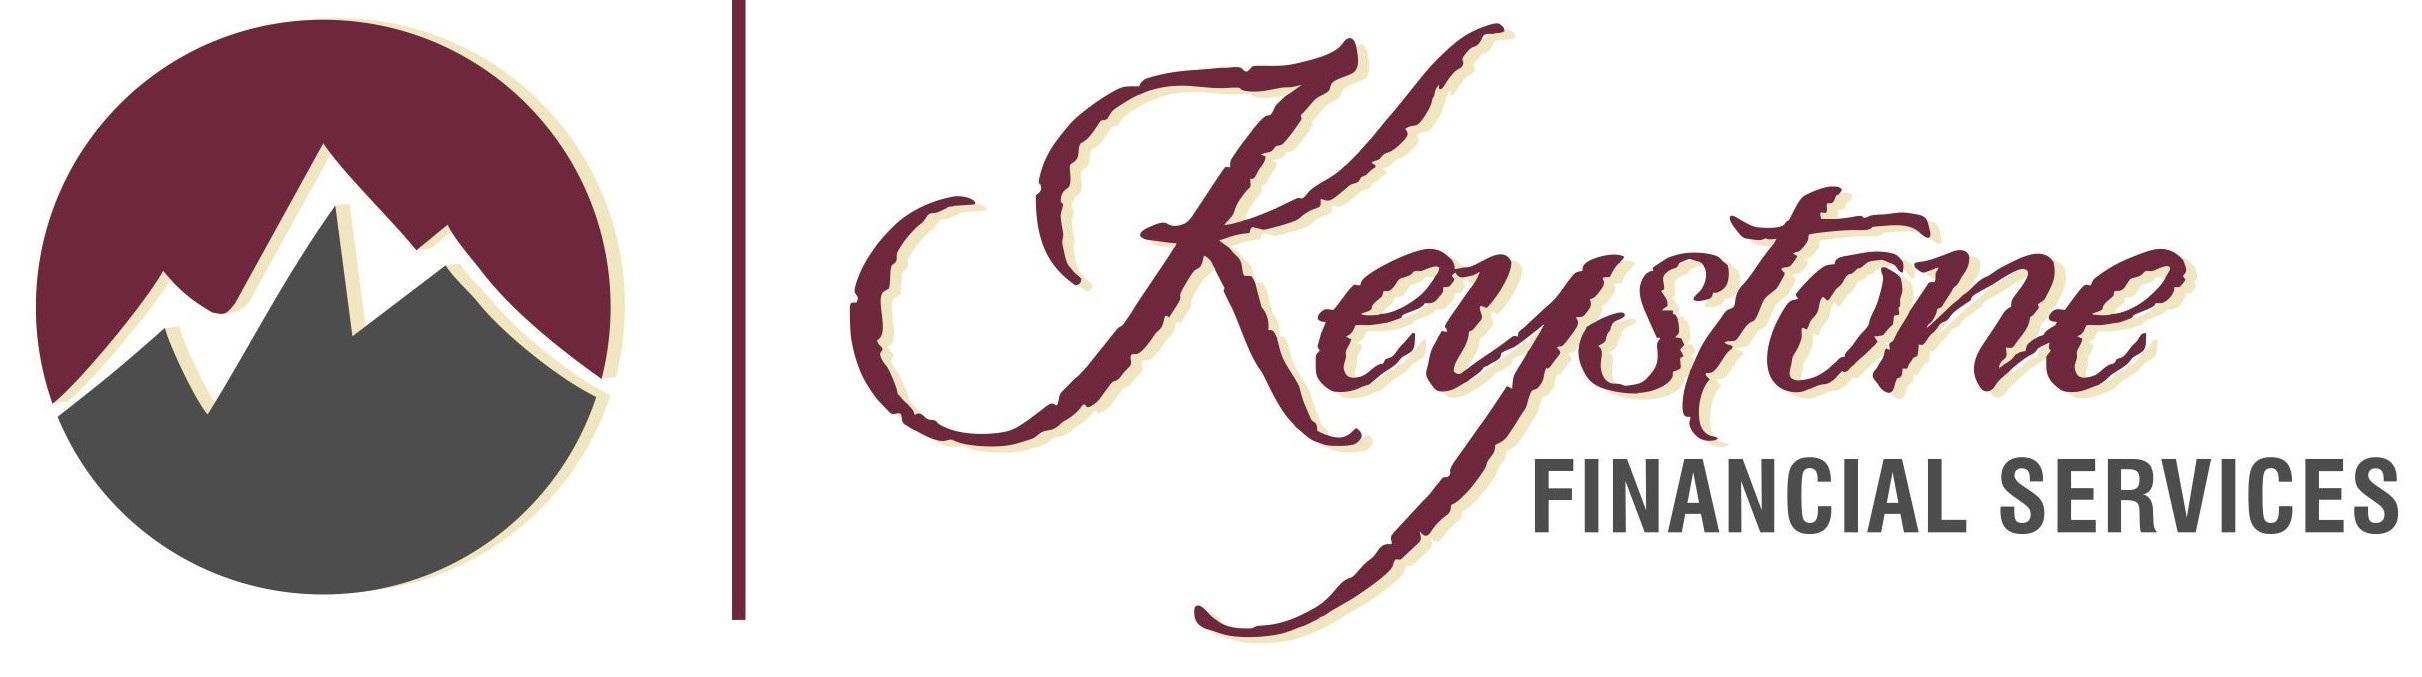 Keystone Financial Services